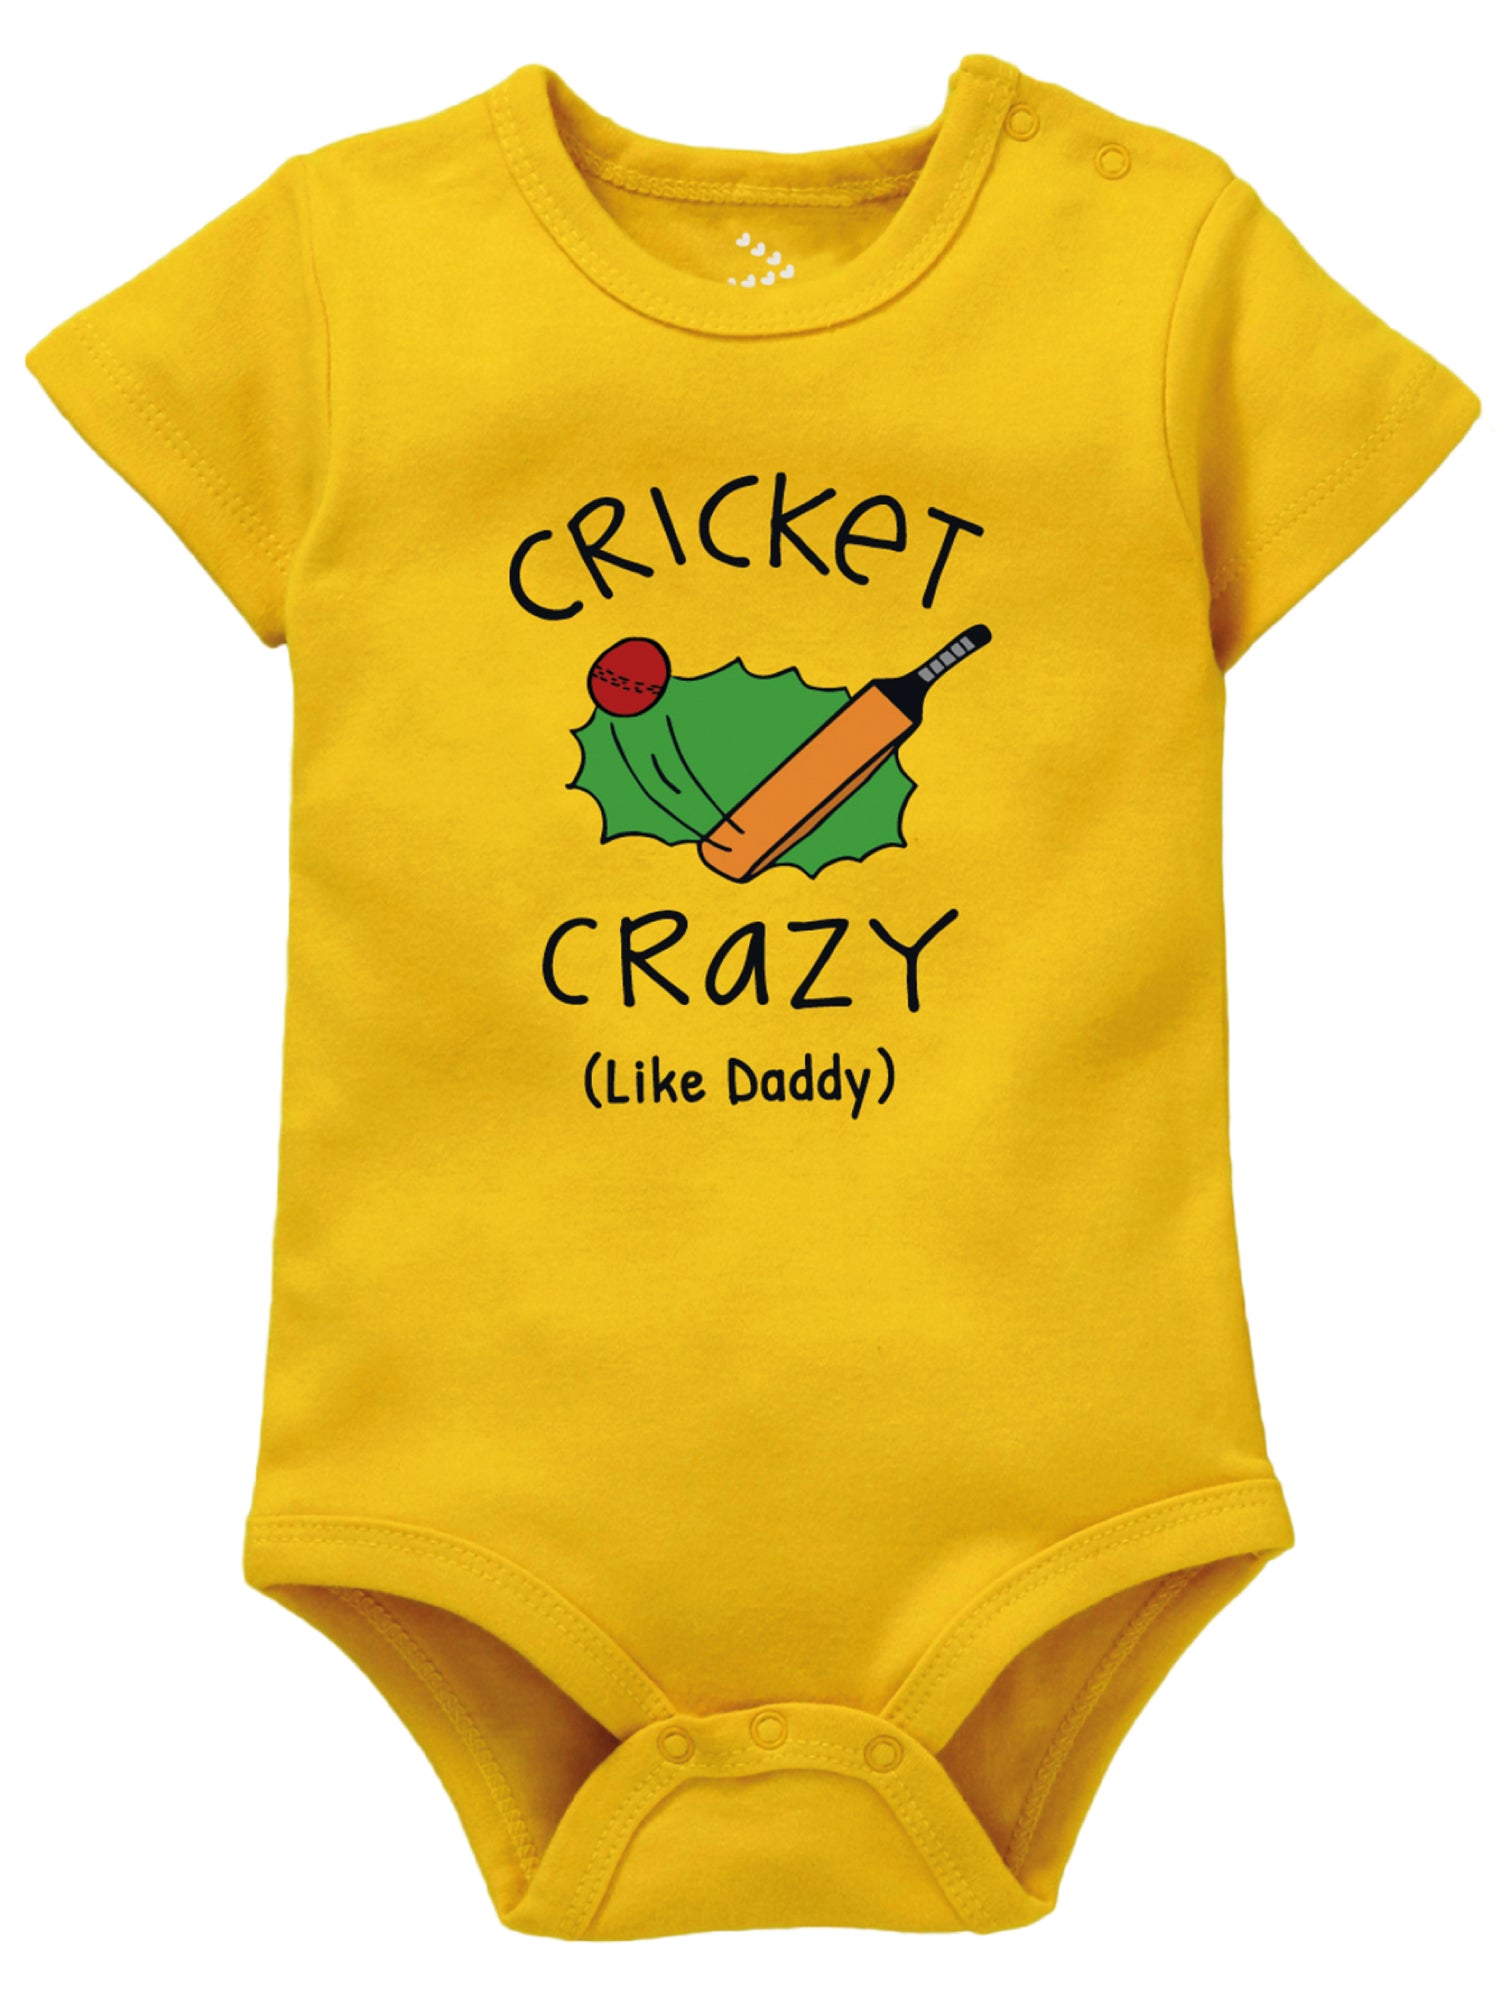 Cricket Crazy - Onesie